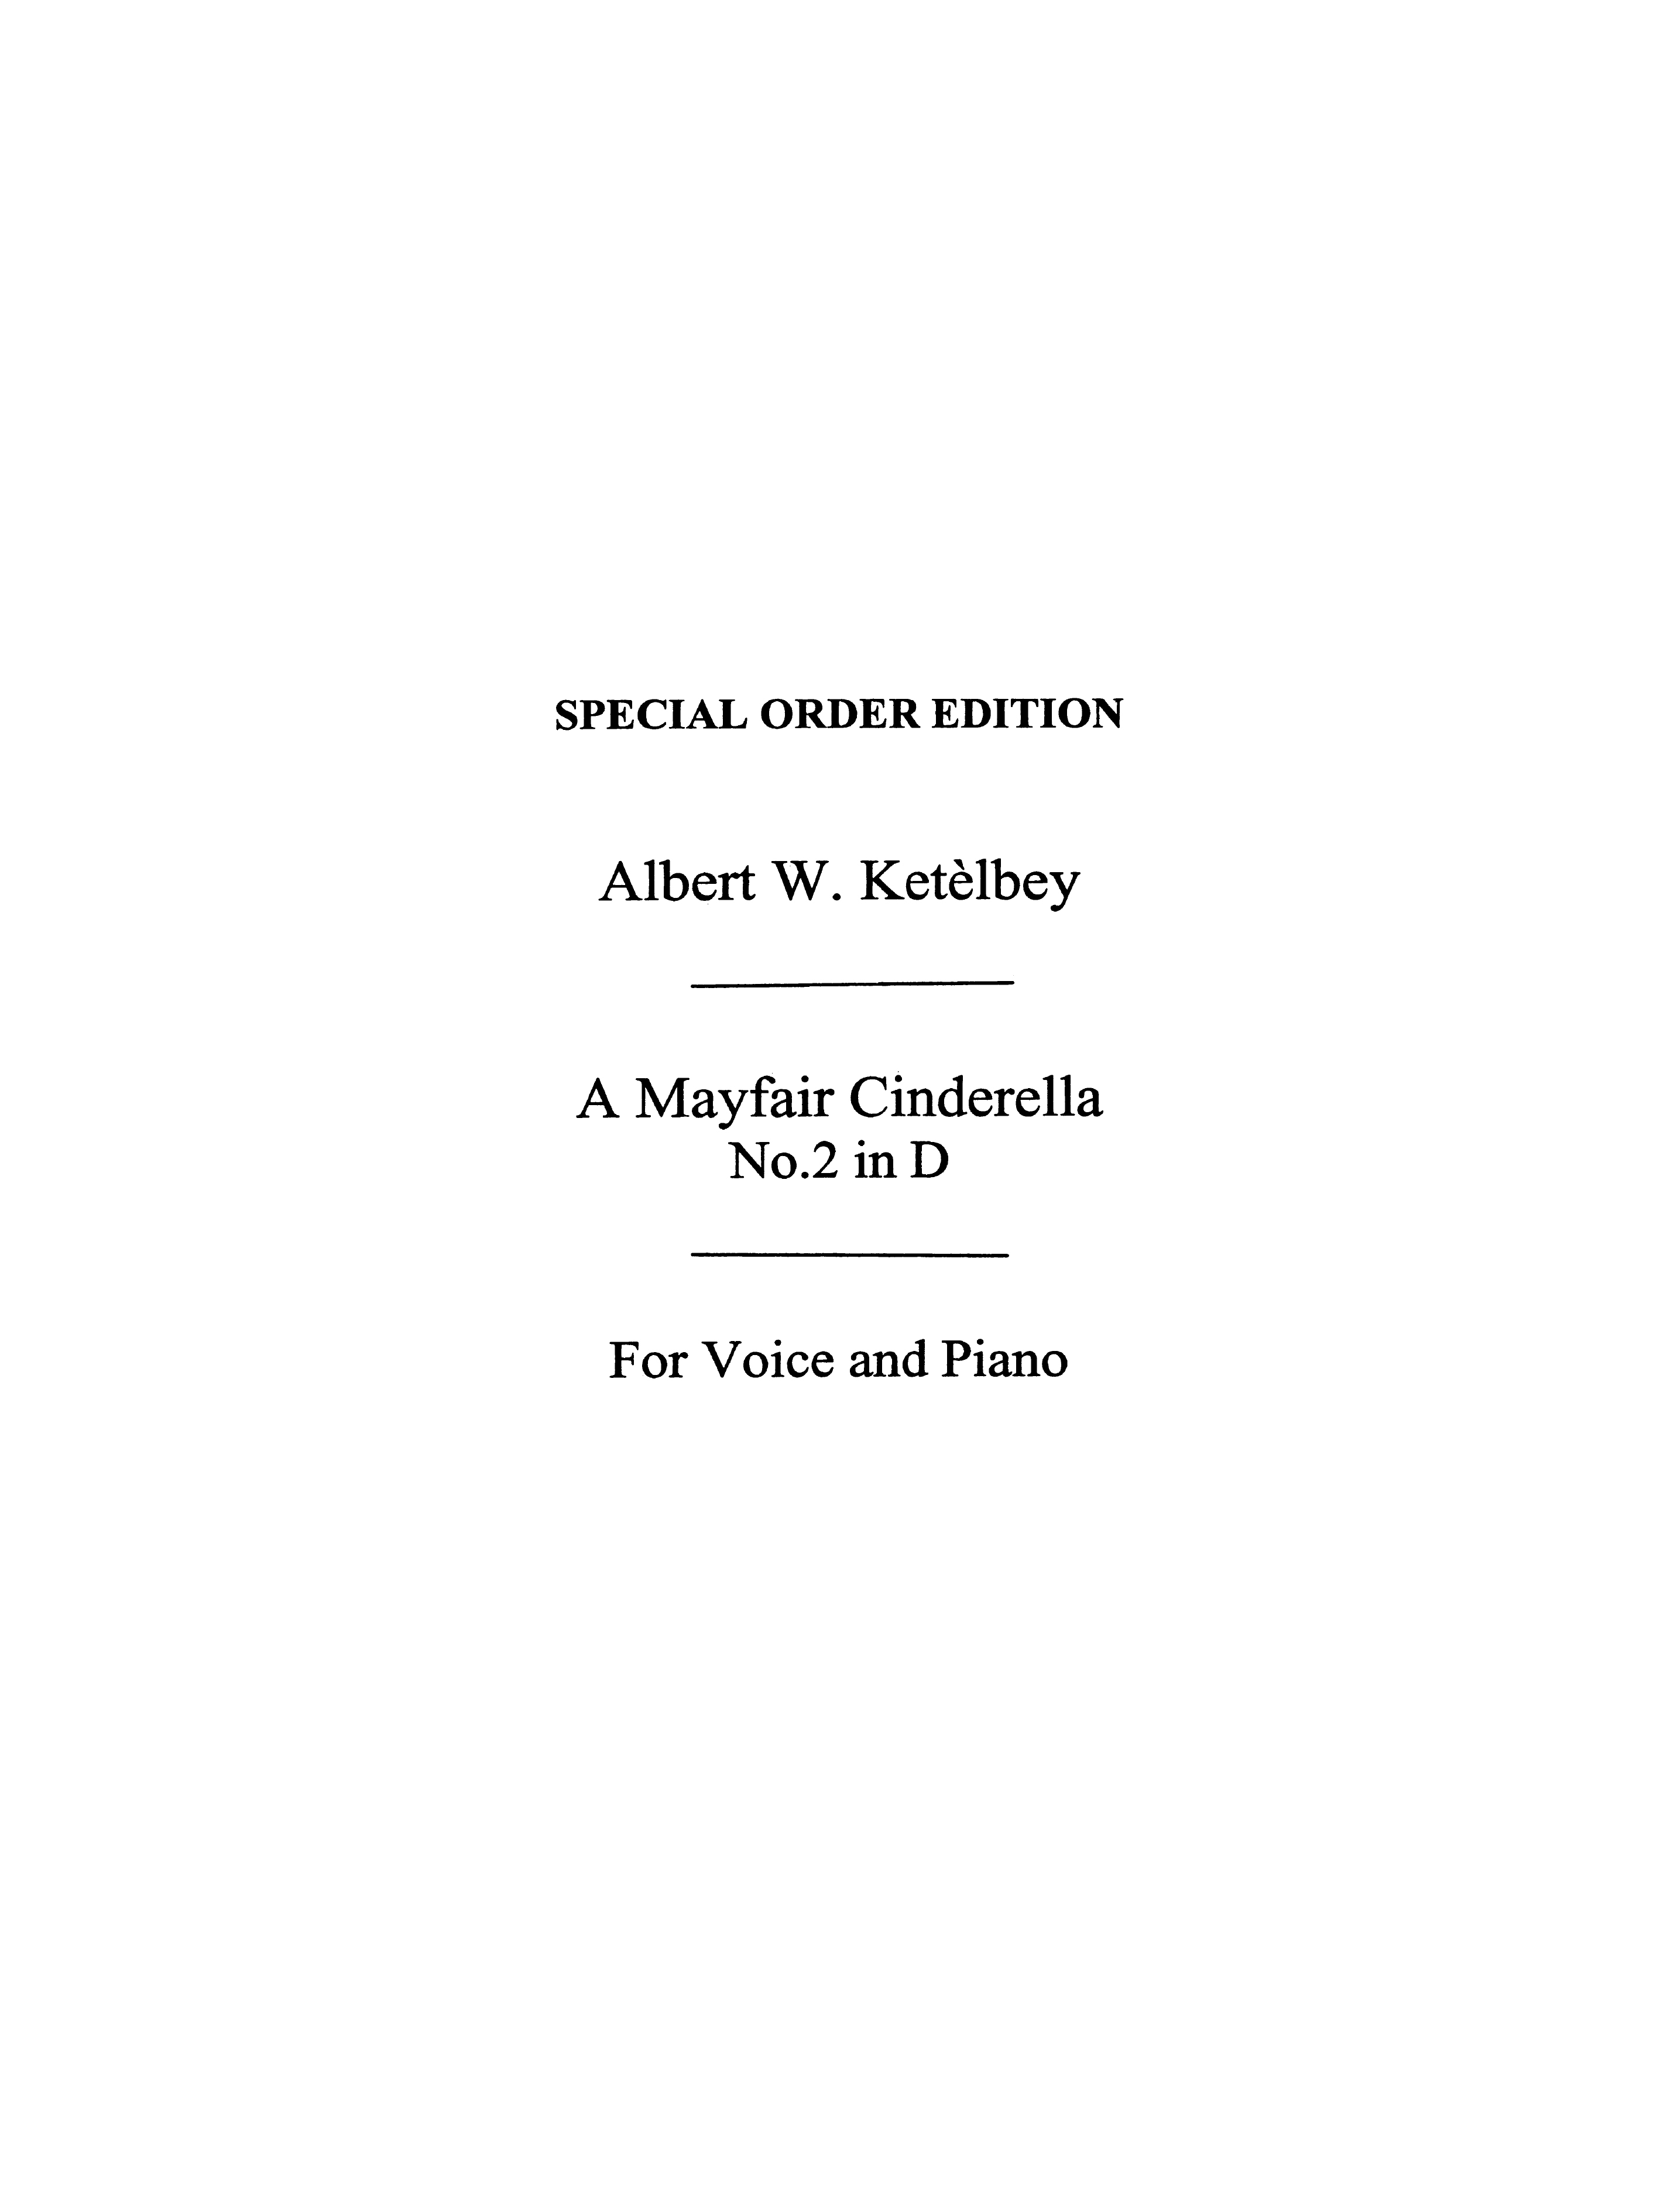 Albert Ketèlbey: Mayfair Cinderella: Voice: Single Sheet